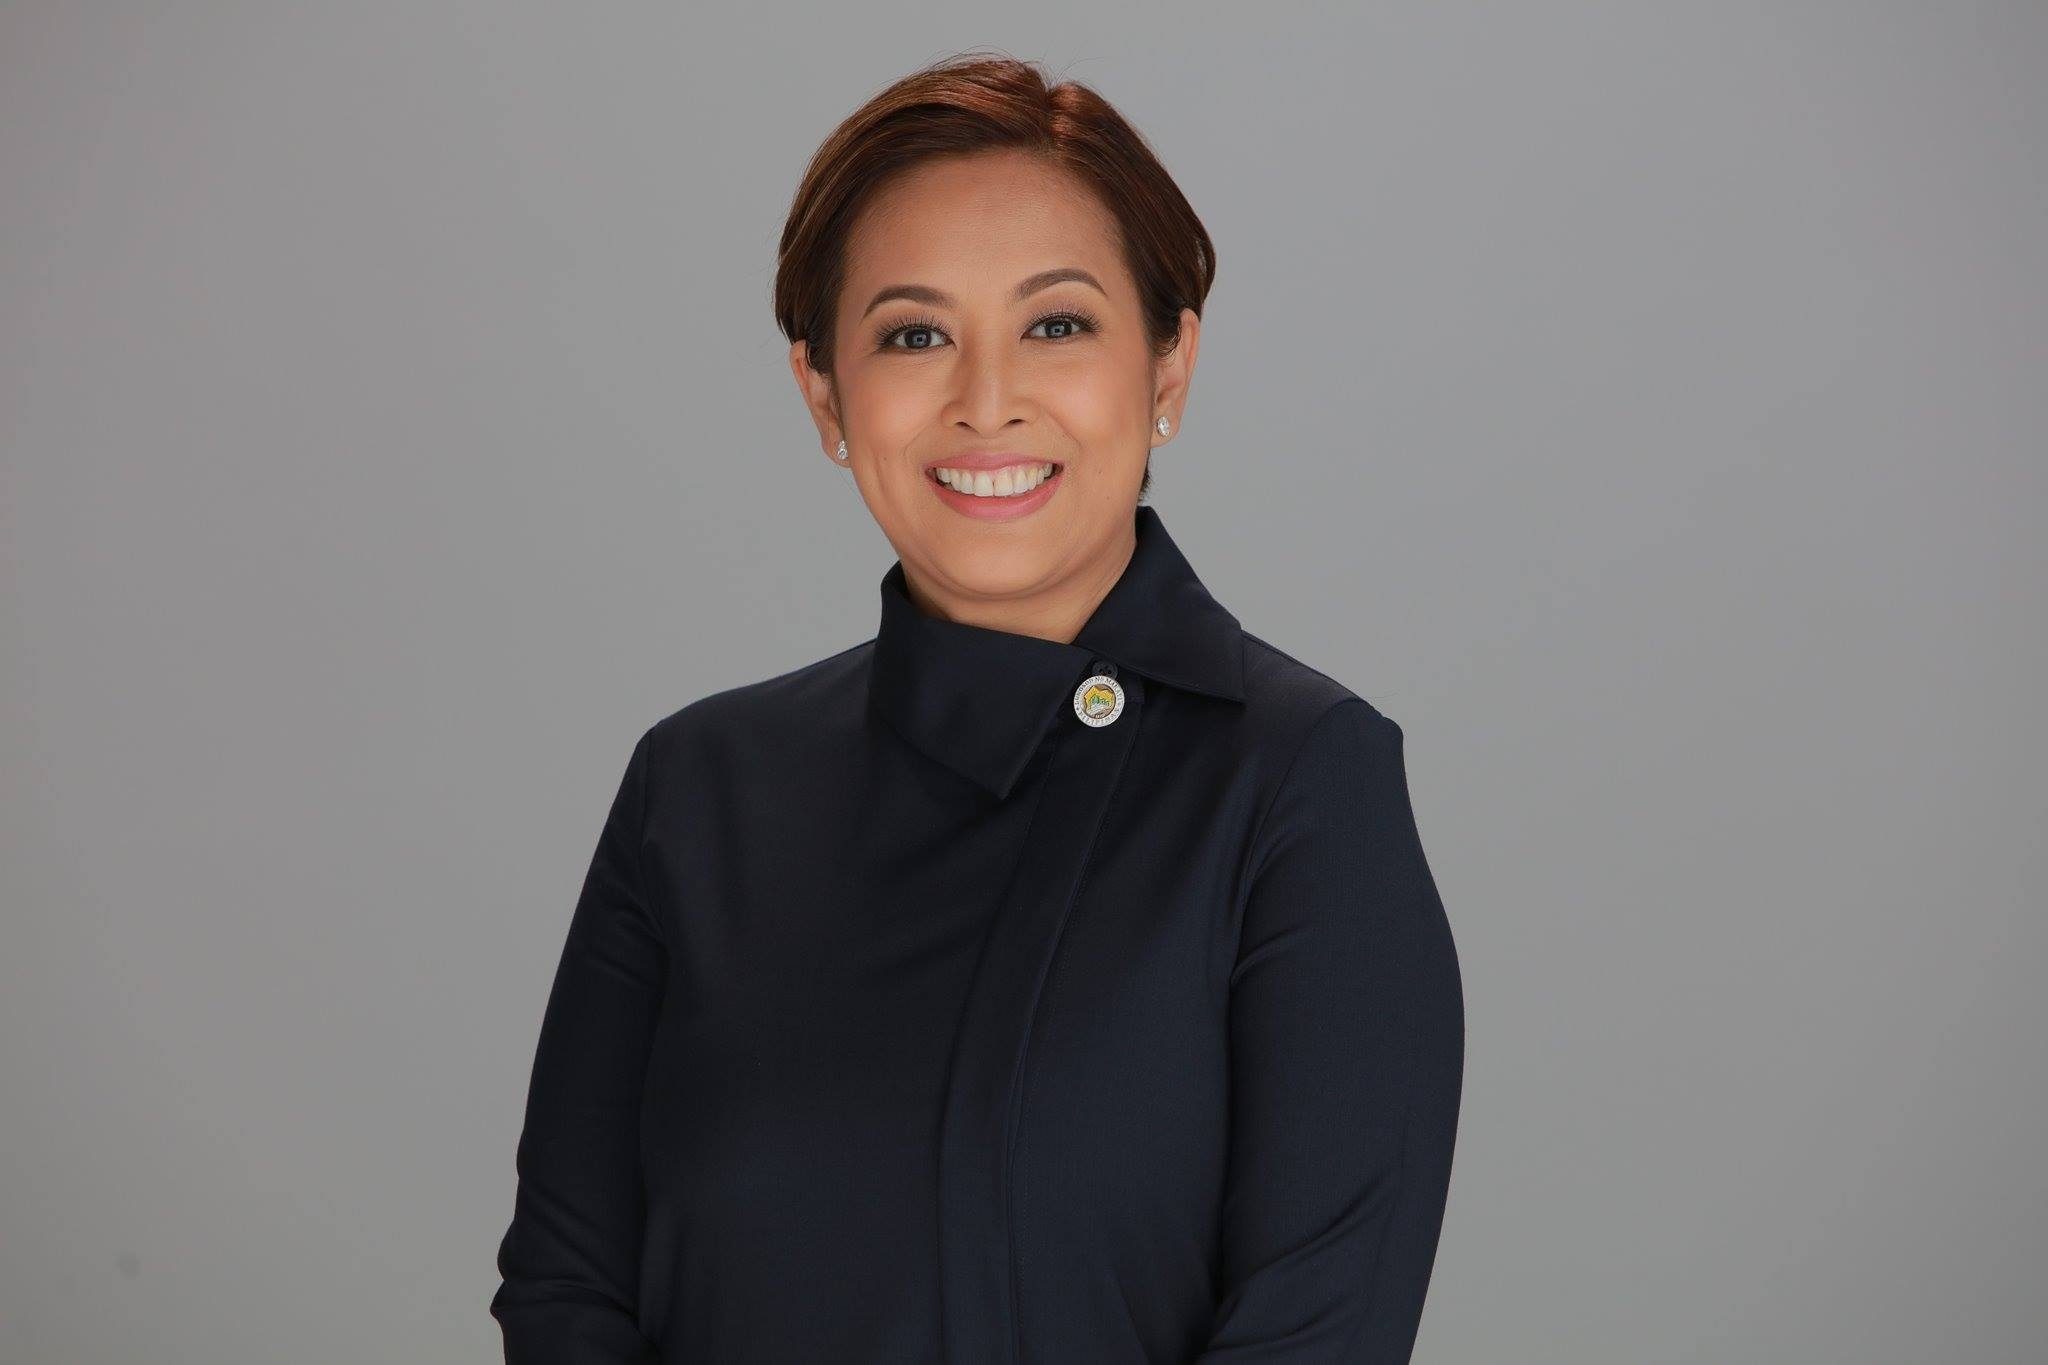 Abby Binay on her way to third term as Makati city mayor